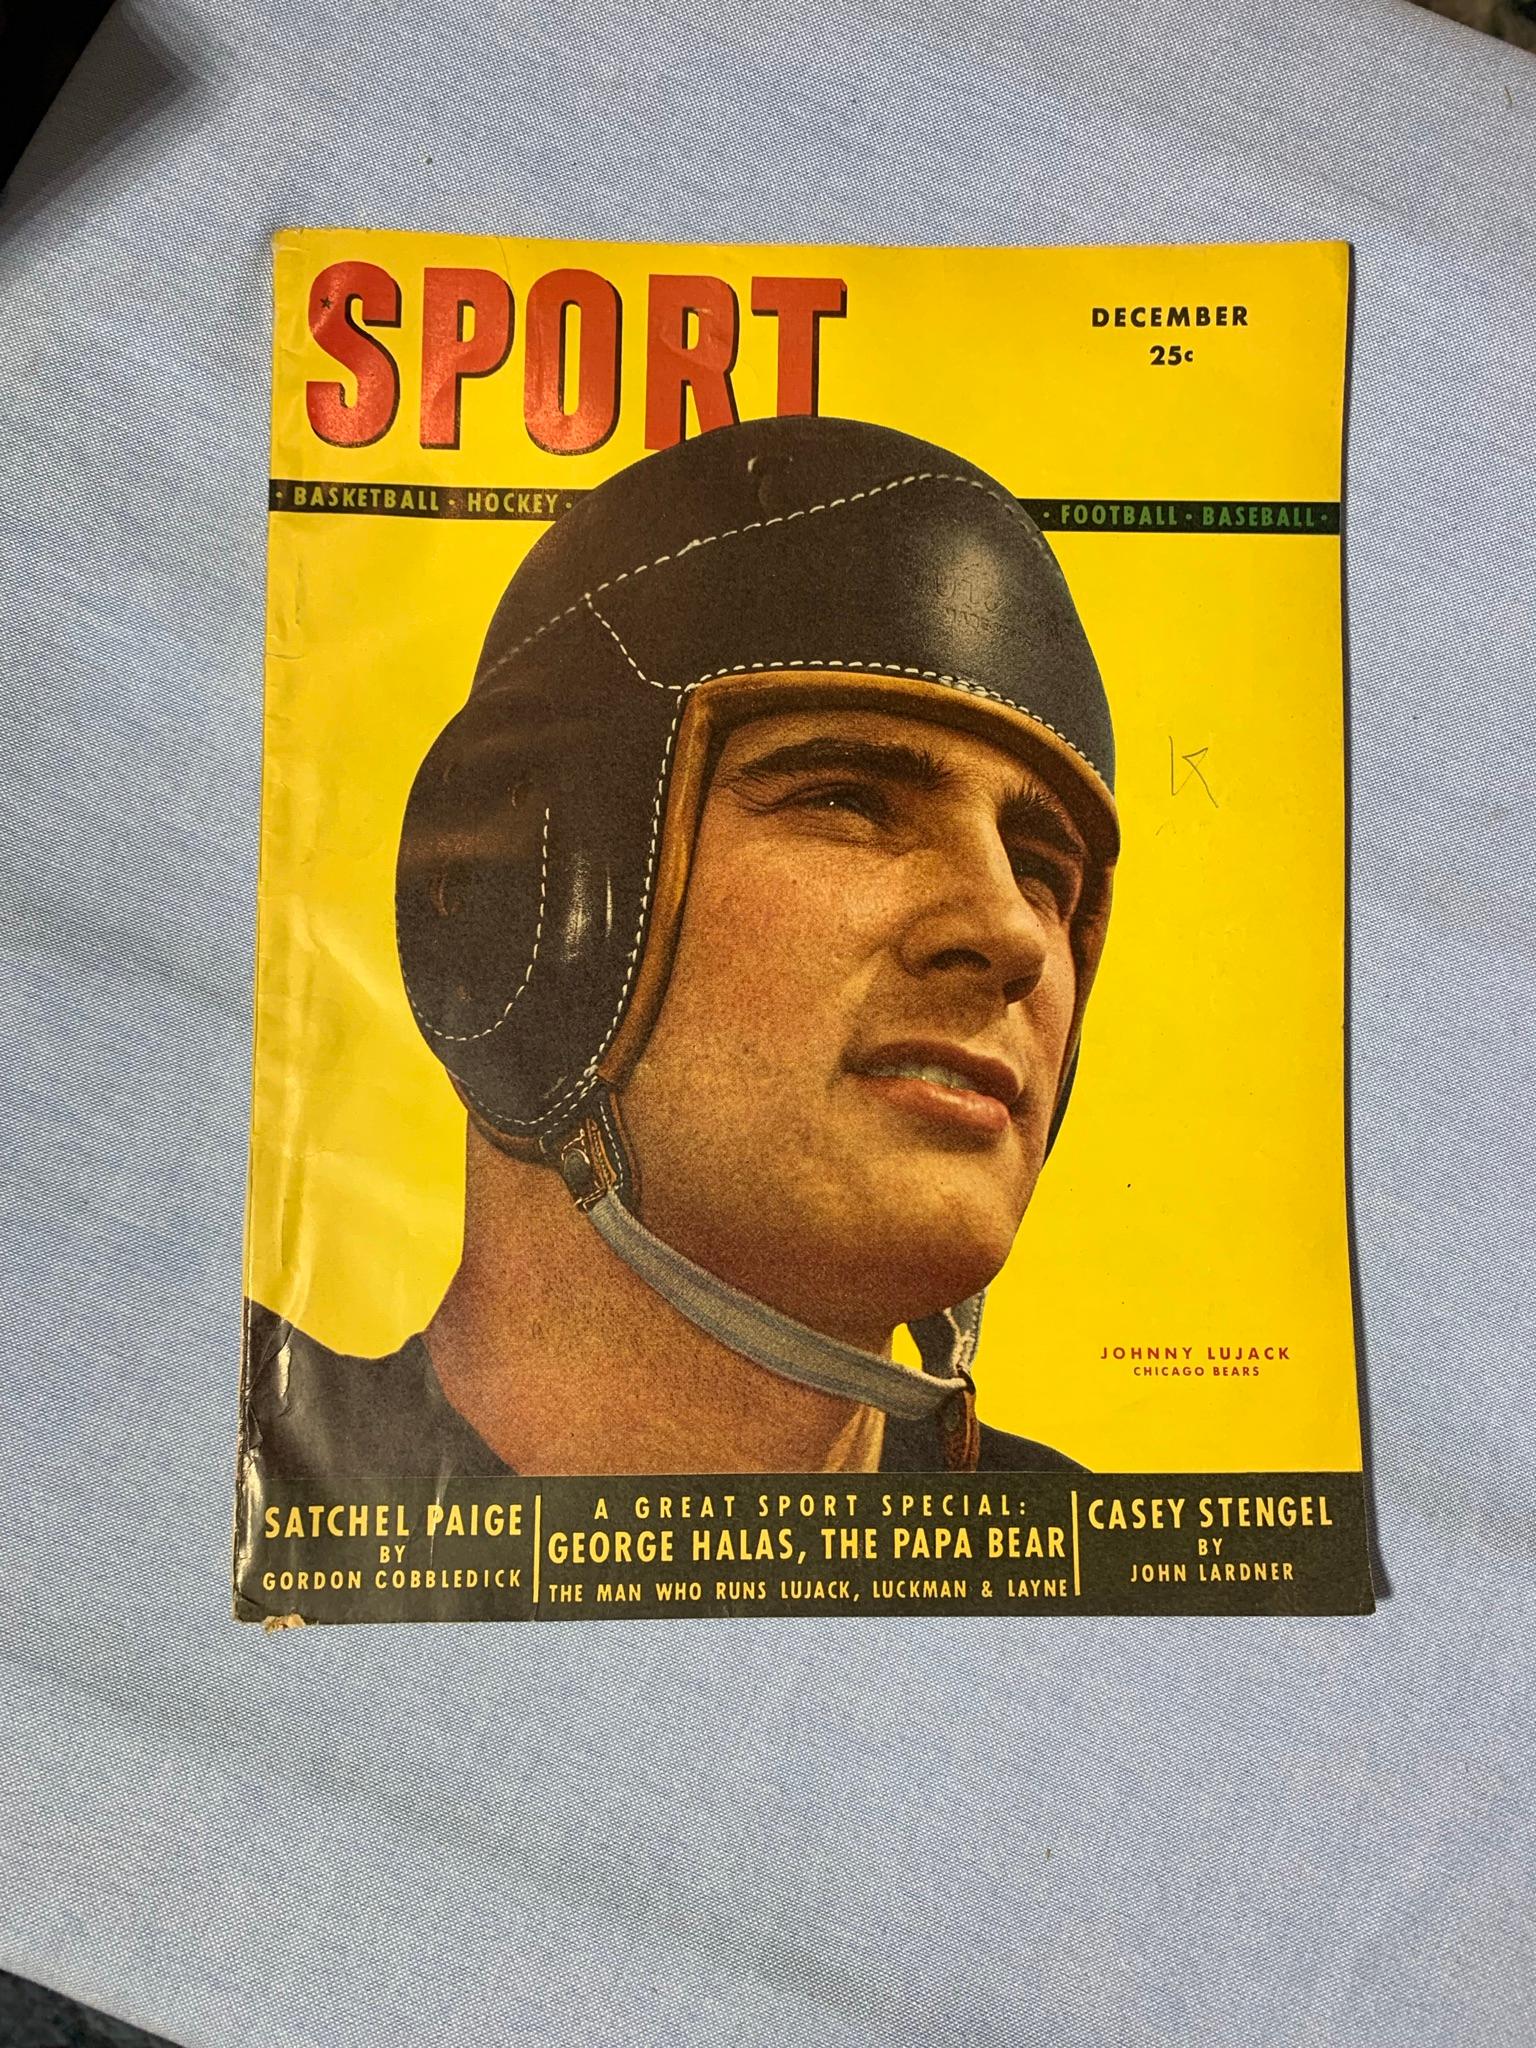 Early Vintage Football Magazines 1950, 1943, 1944